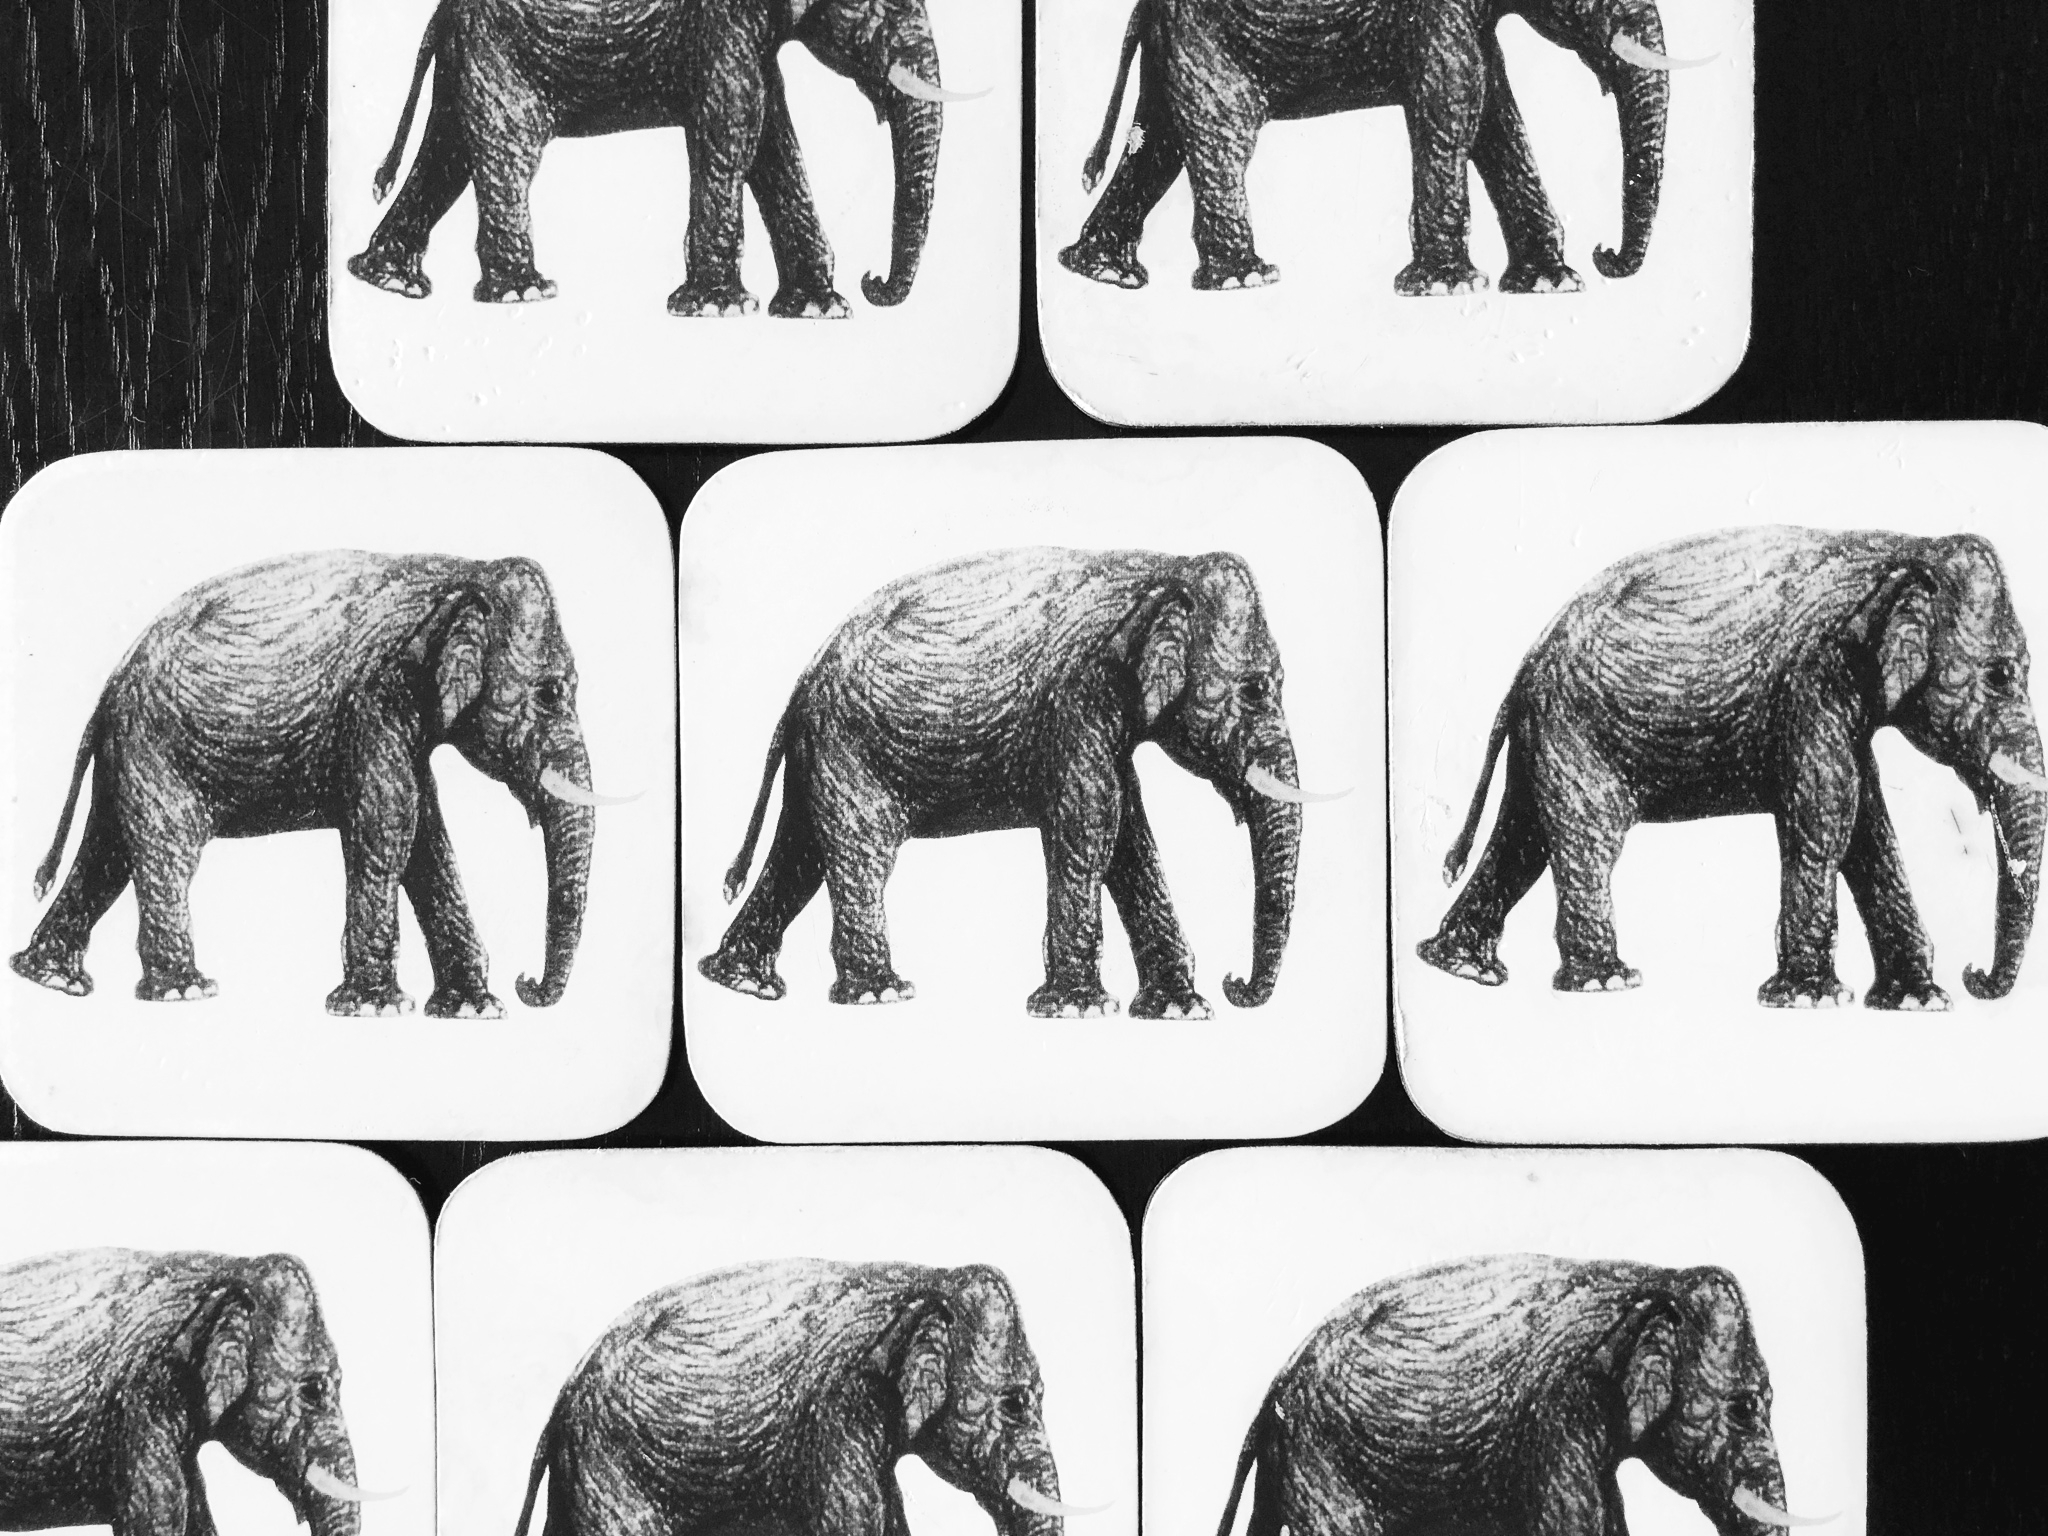 Elephant motif coasters available at Paradise Road